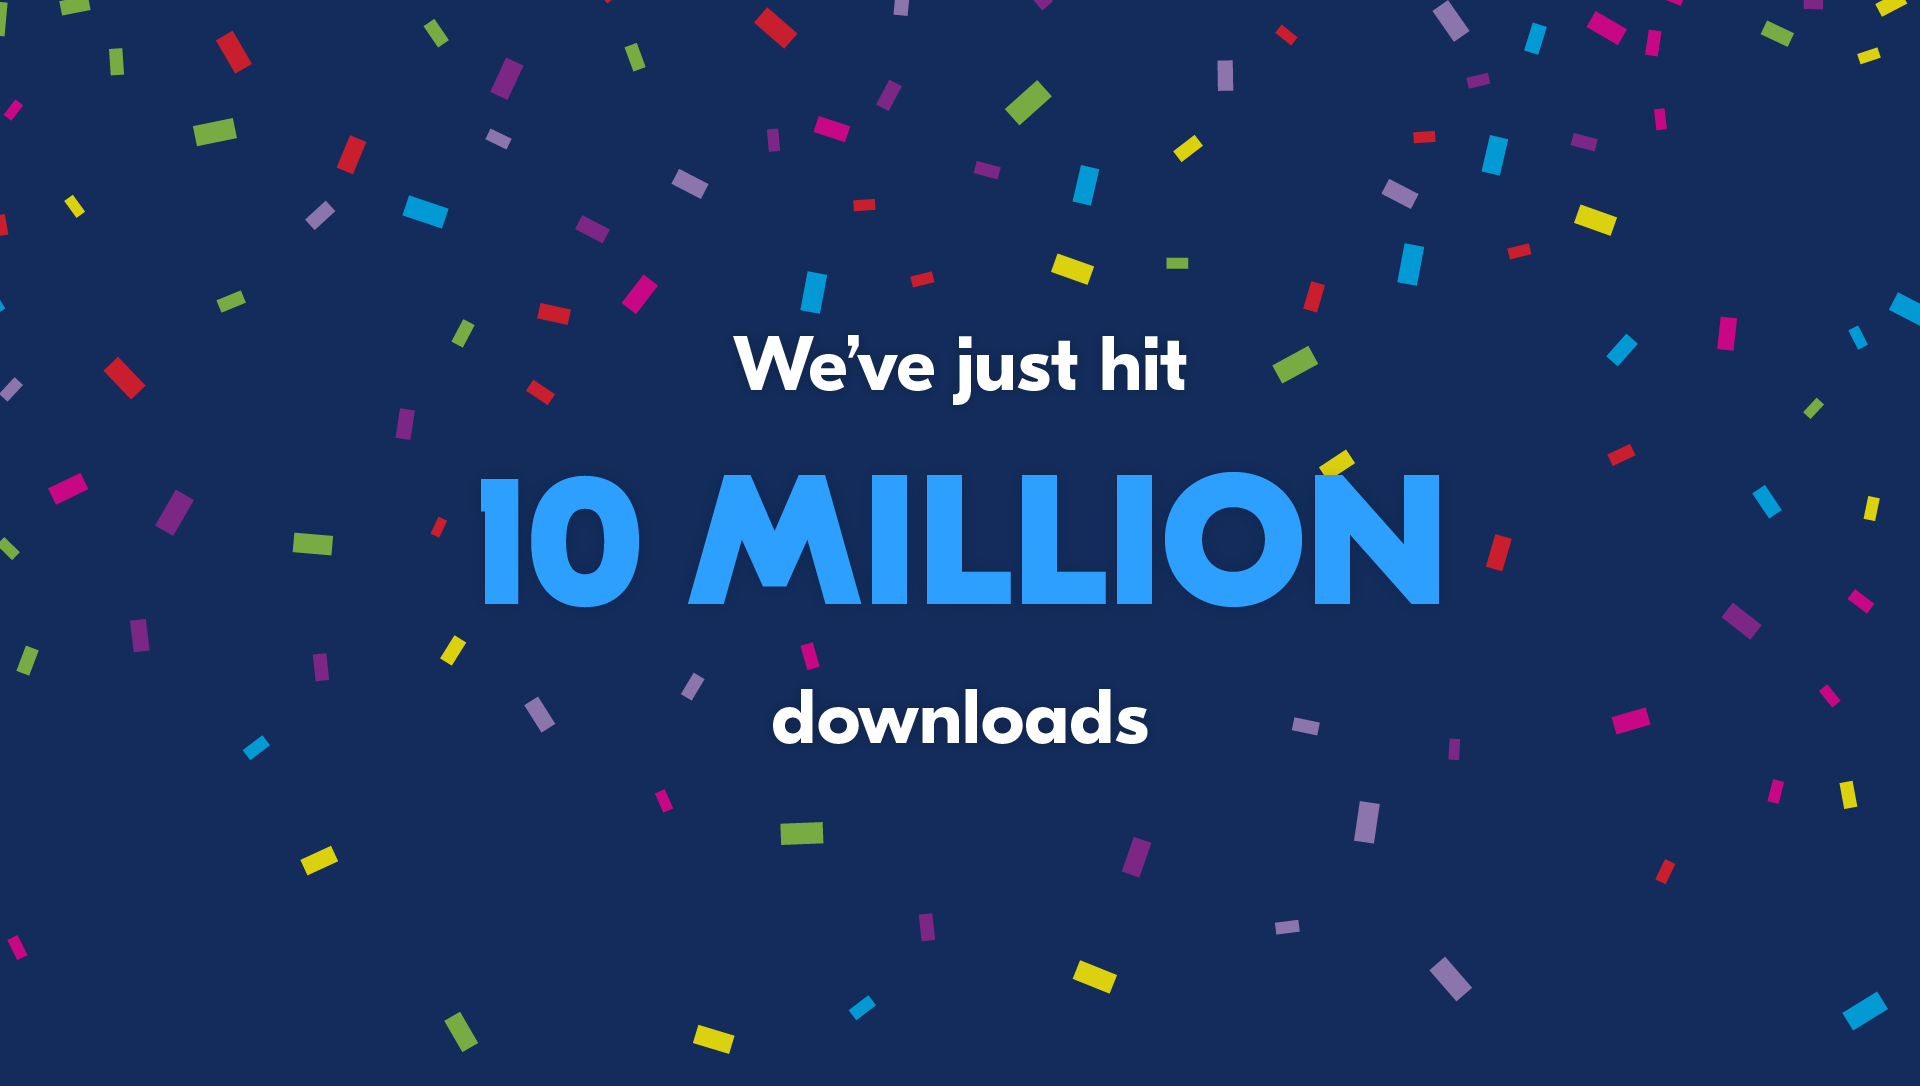 Airport Master reaches 10 million downloads